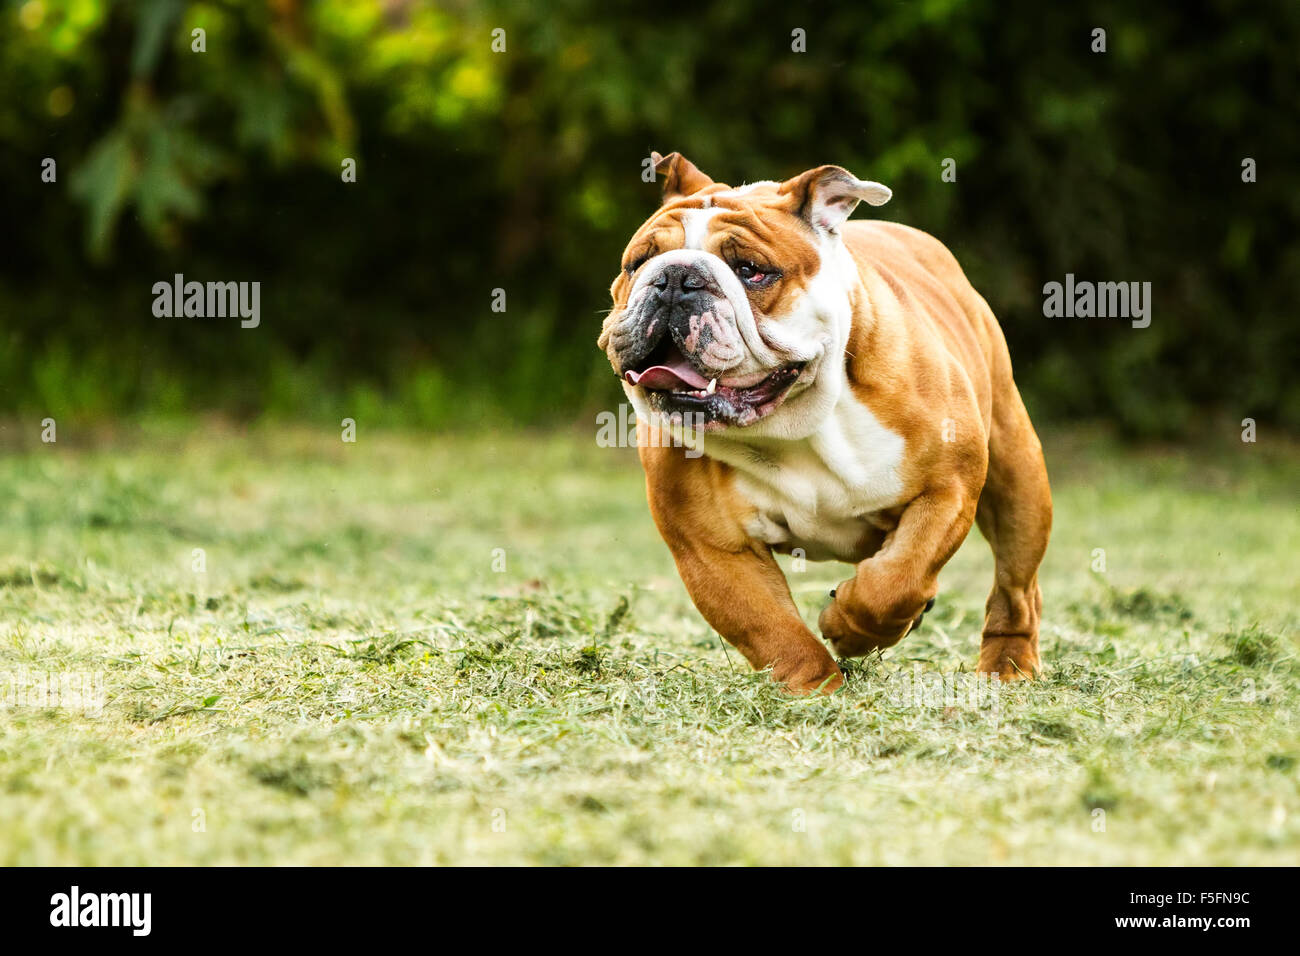 Adult Male Purebred English Bulldog Run Toward The Camera Low Angle Stock Photo